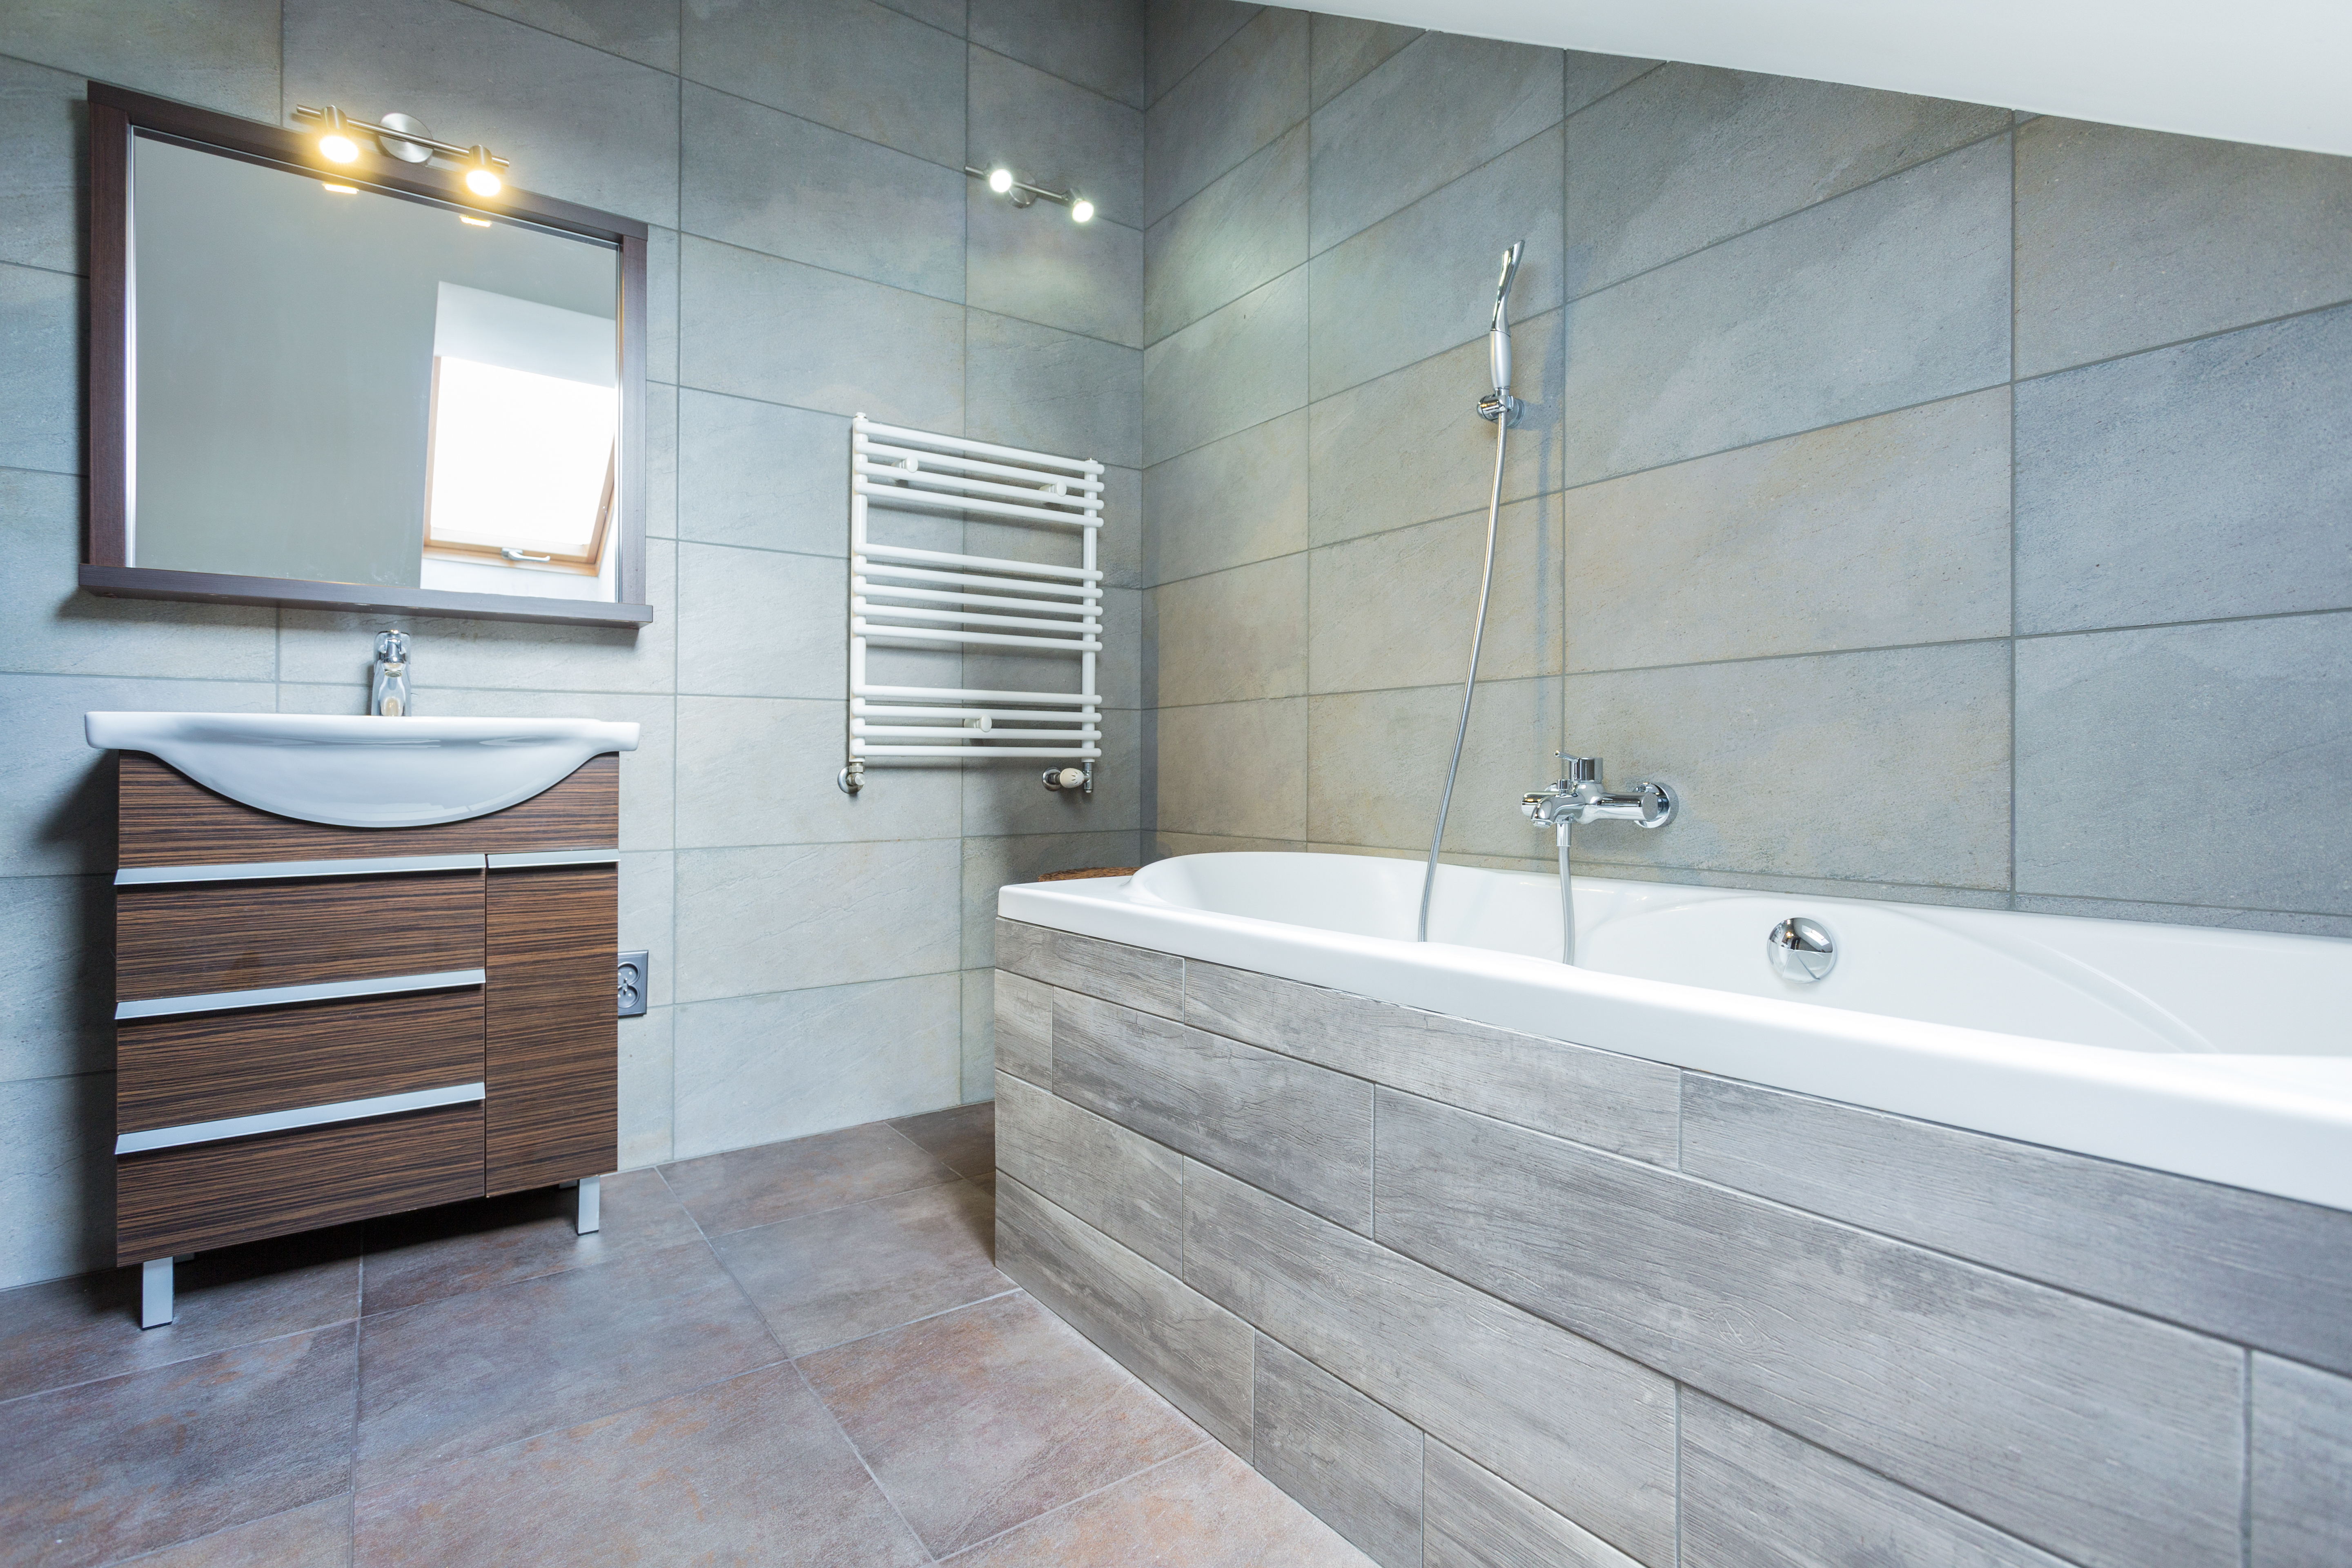 Bathroom interior with matte porcelain-tiled surfaces | Source: Shutterstock